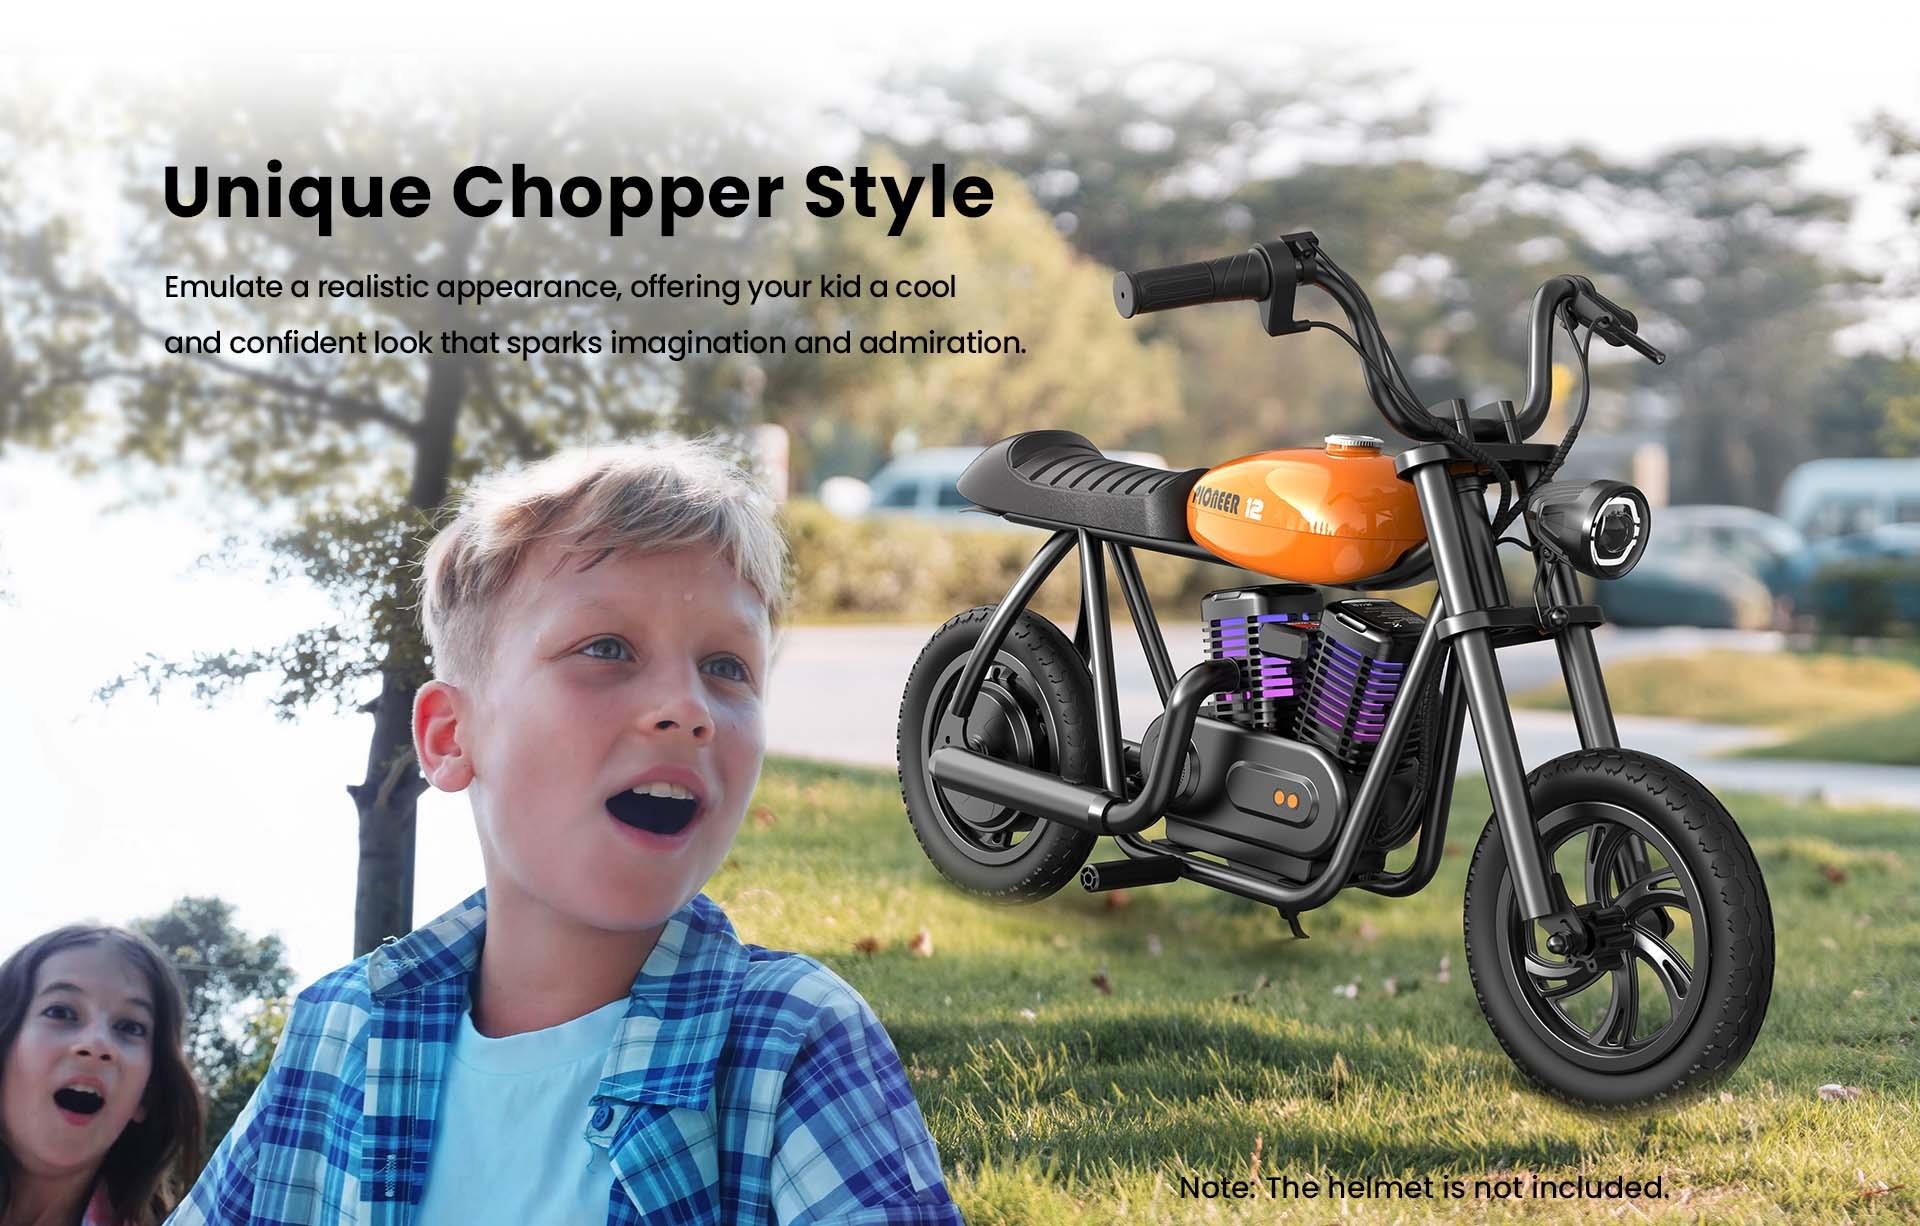 HYPER GOGO Pioneer 12 Plus Electric Chopper Motorcycle for Kids, 21.9V 5.2Ah 160W, 12x3 Tires, 12KM - Green